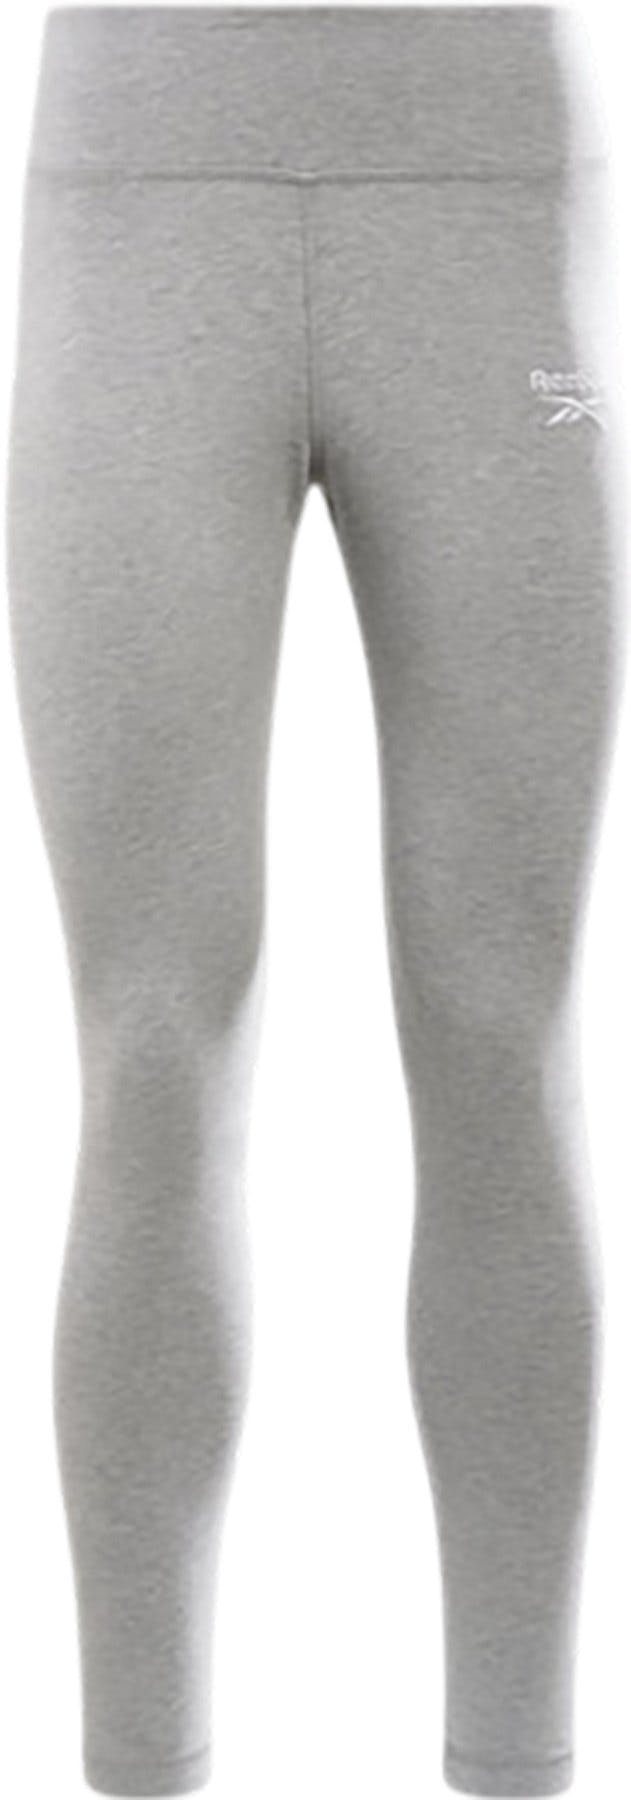 Product image for Reebok Identity Leggings - Women's